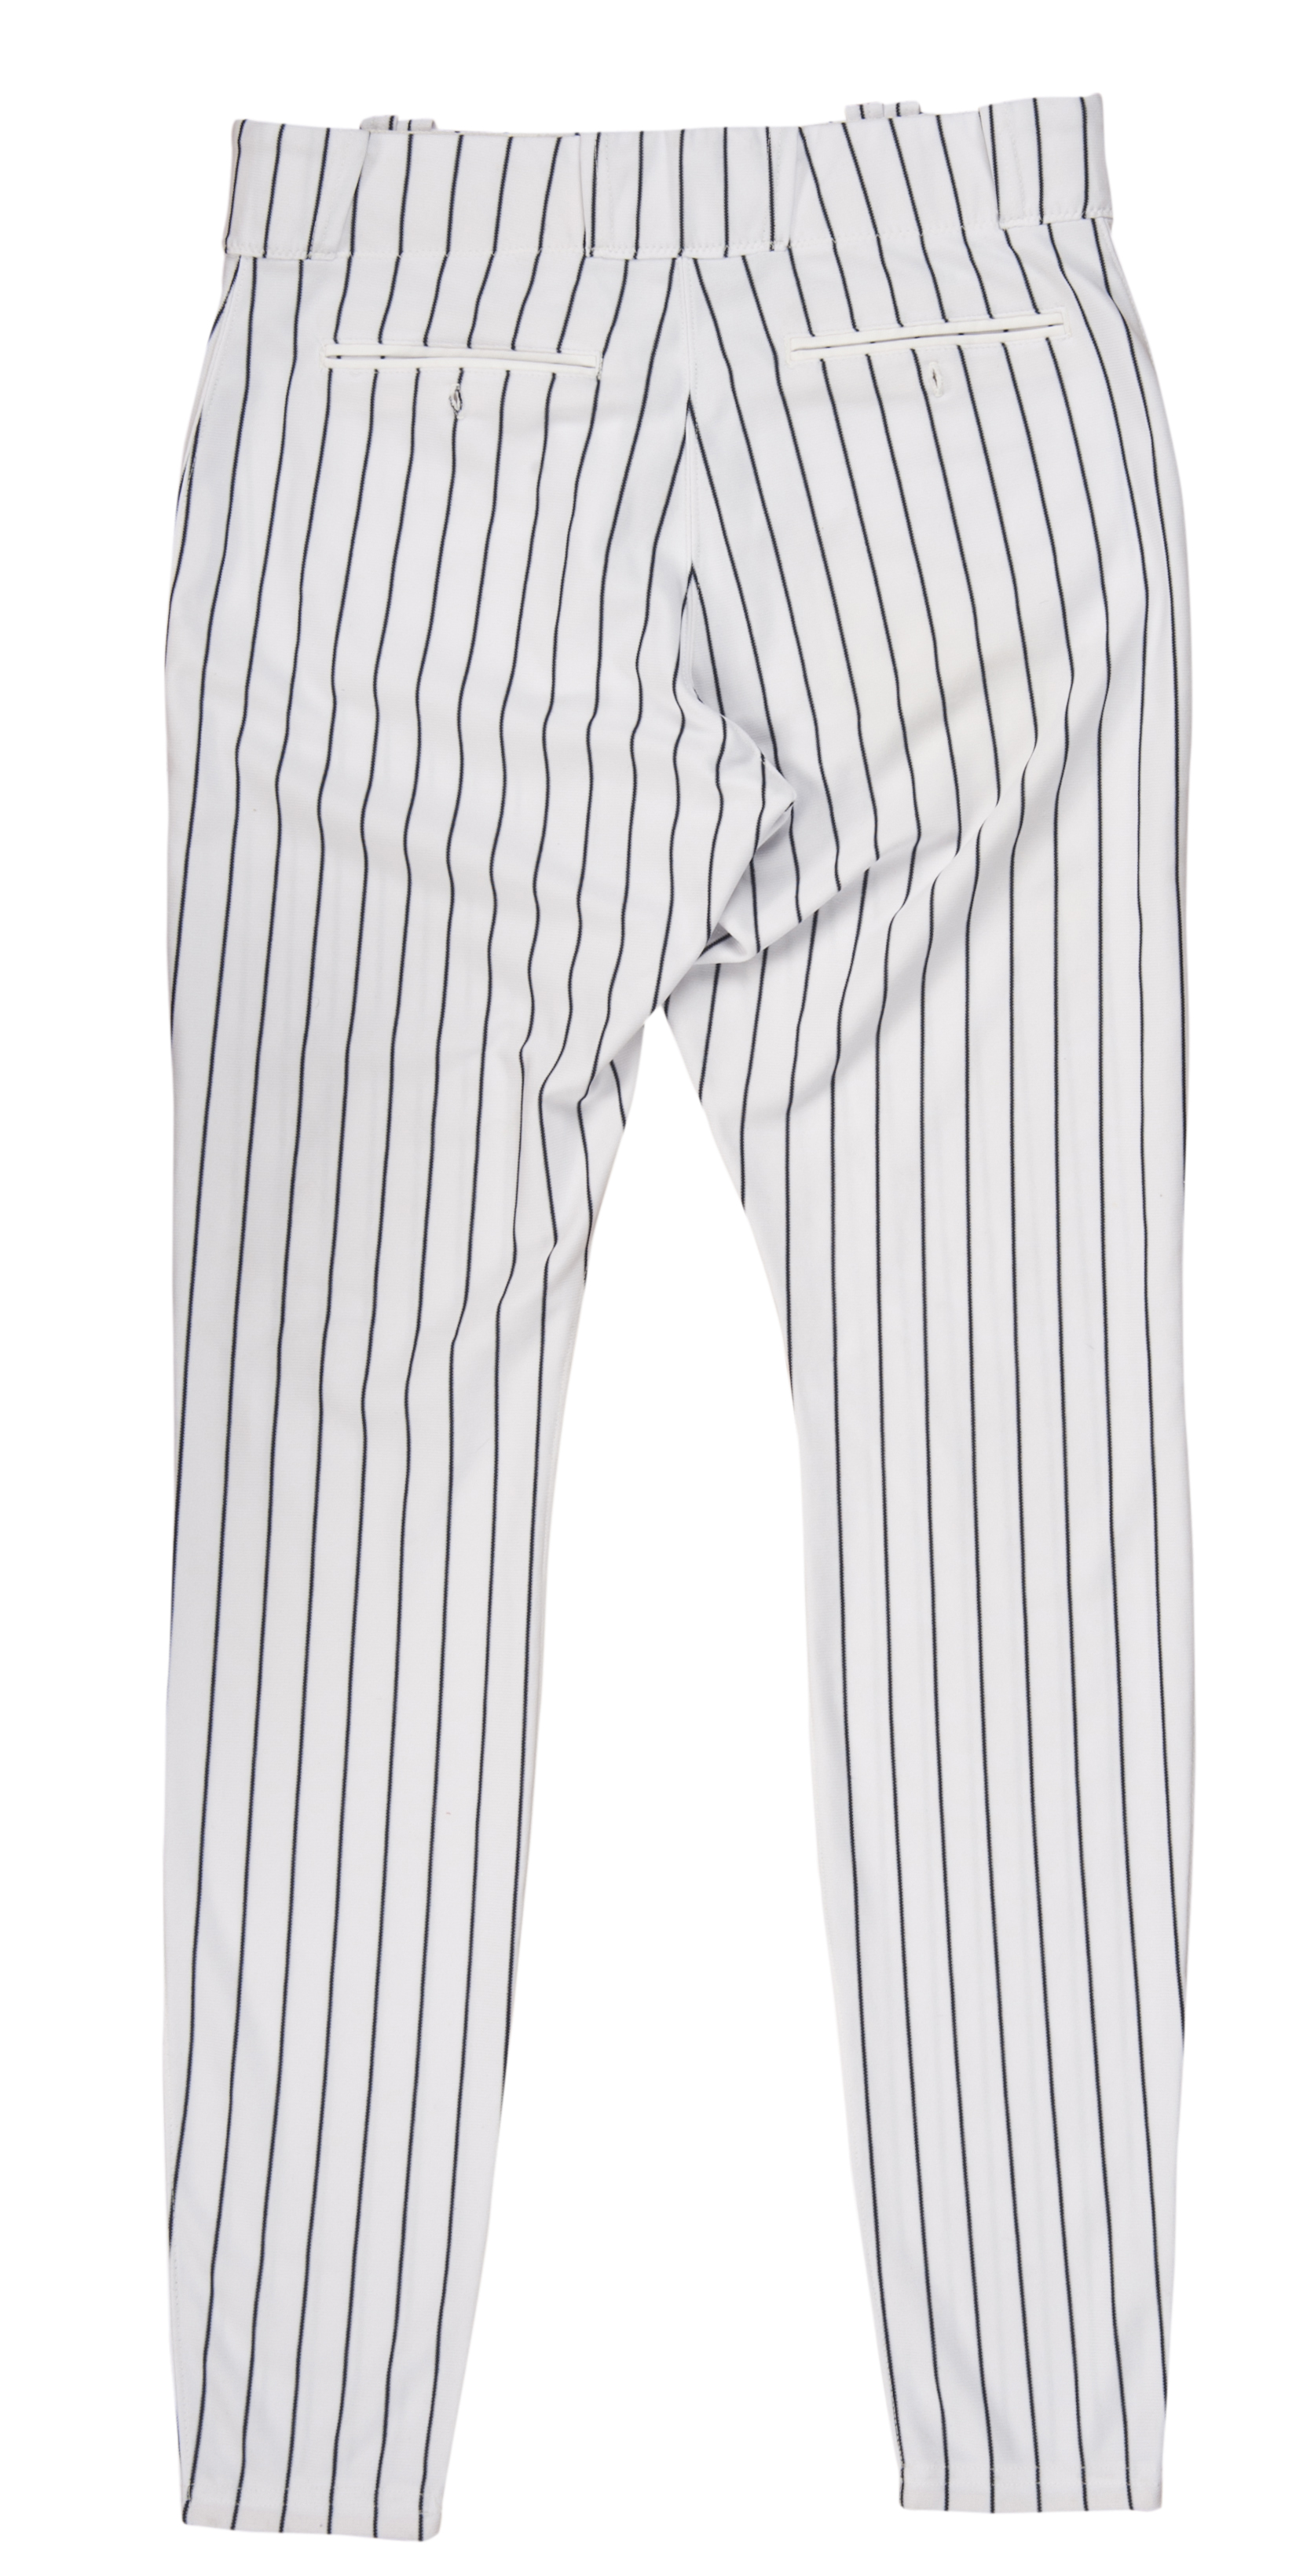 Lot Detail - 2009 Derek Jeter Game Worn New York Yankees Pinstripe Home Pants (Yankees ...1664 x 3279